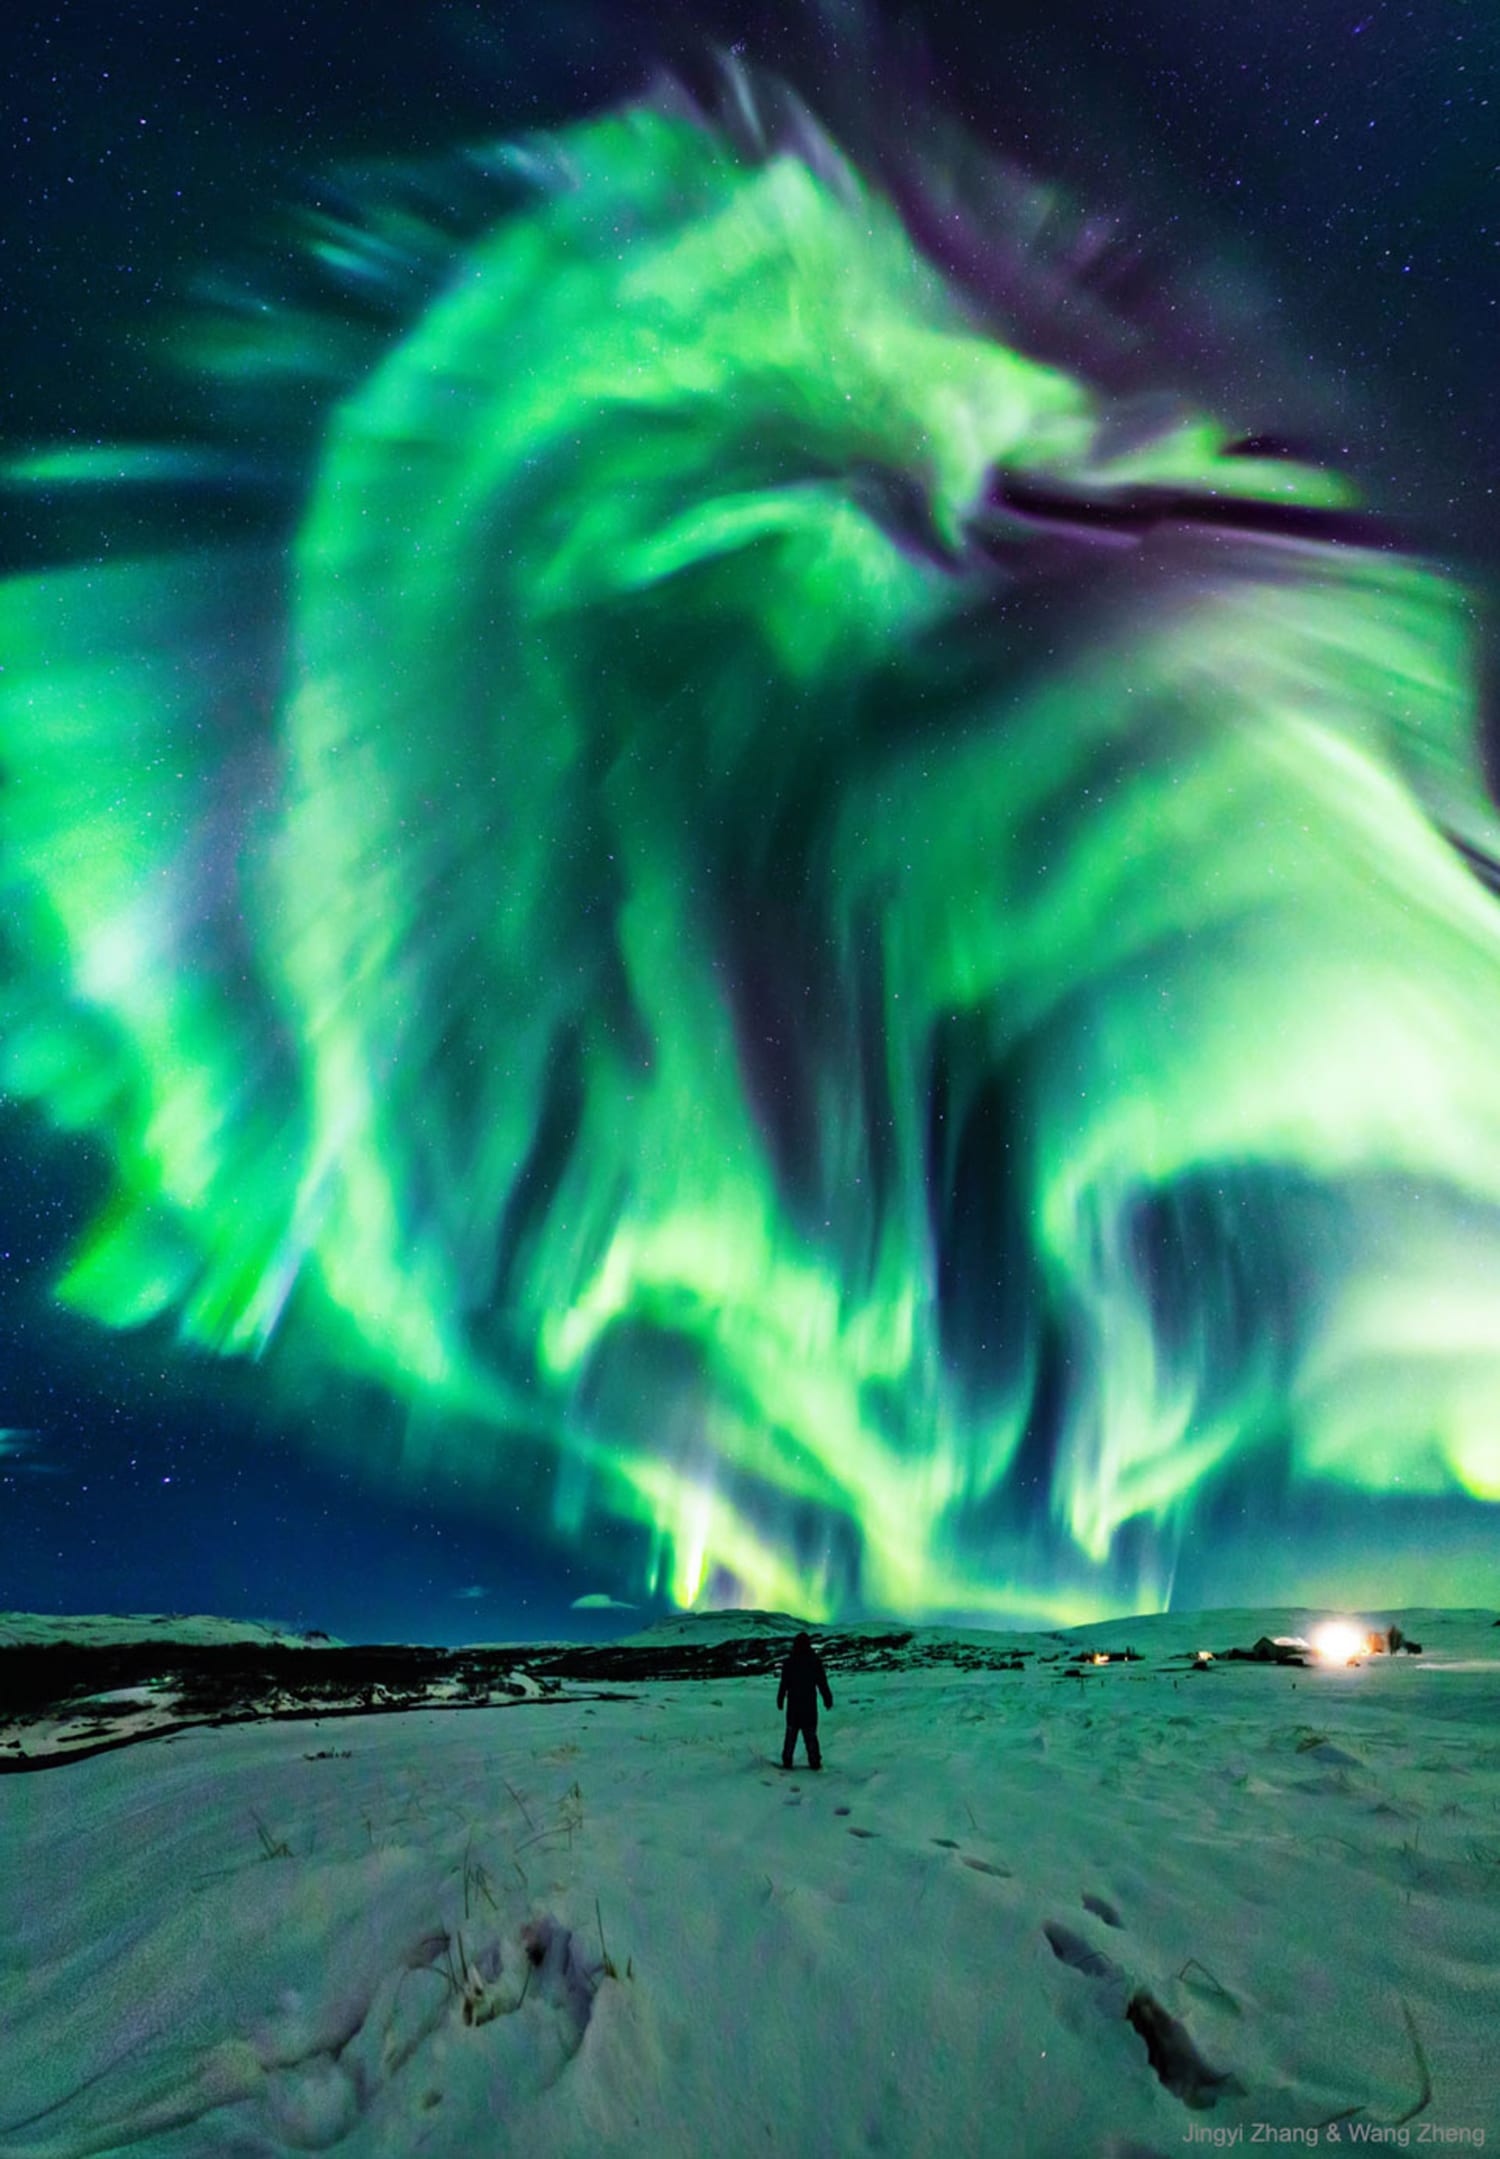 Dragon Aurora Dancing Over Iceland Captured In Stunning Photo